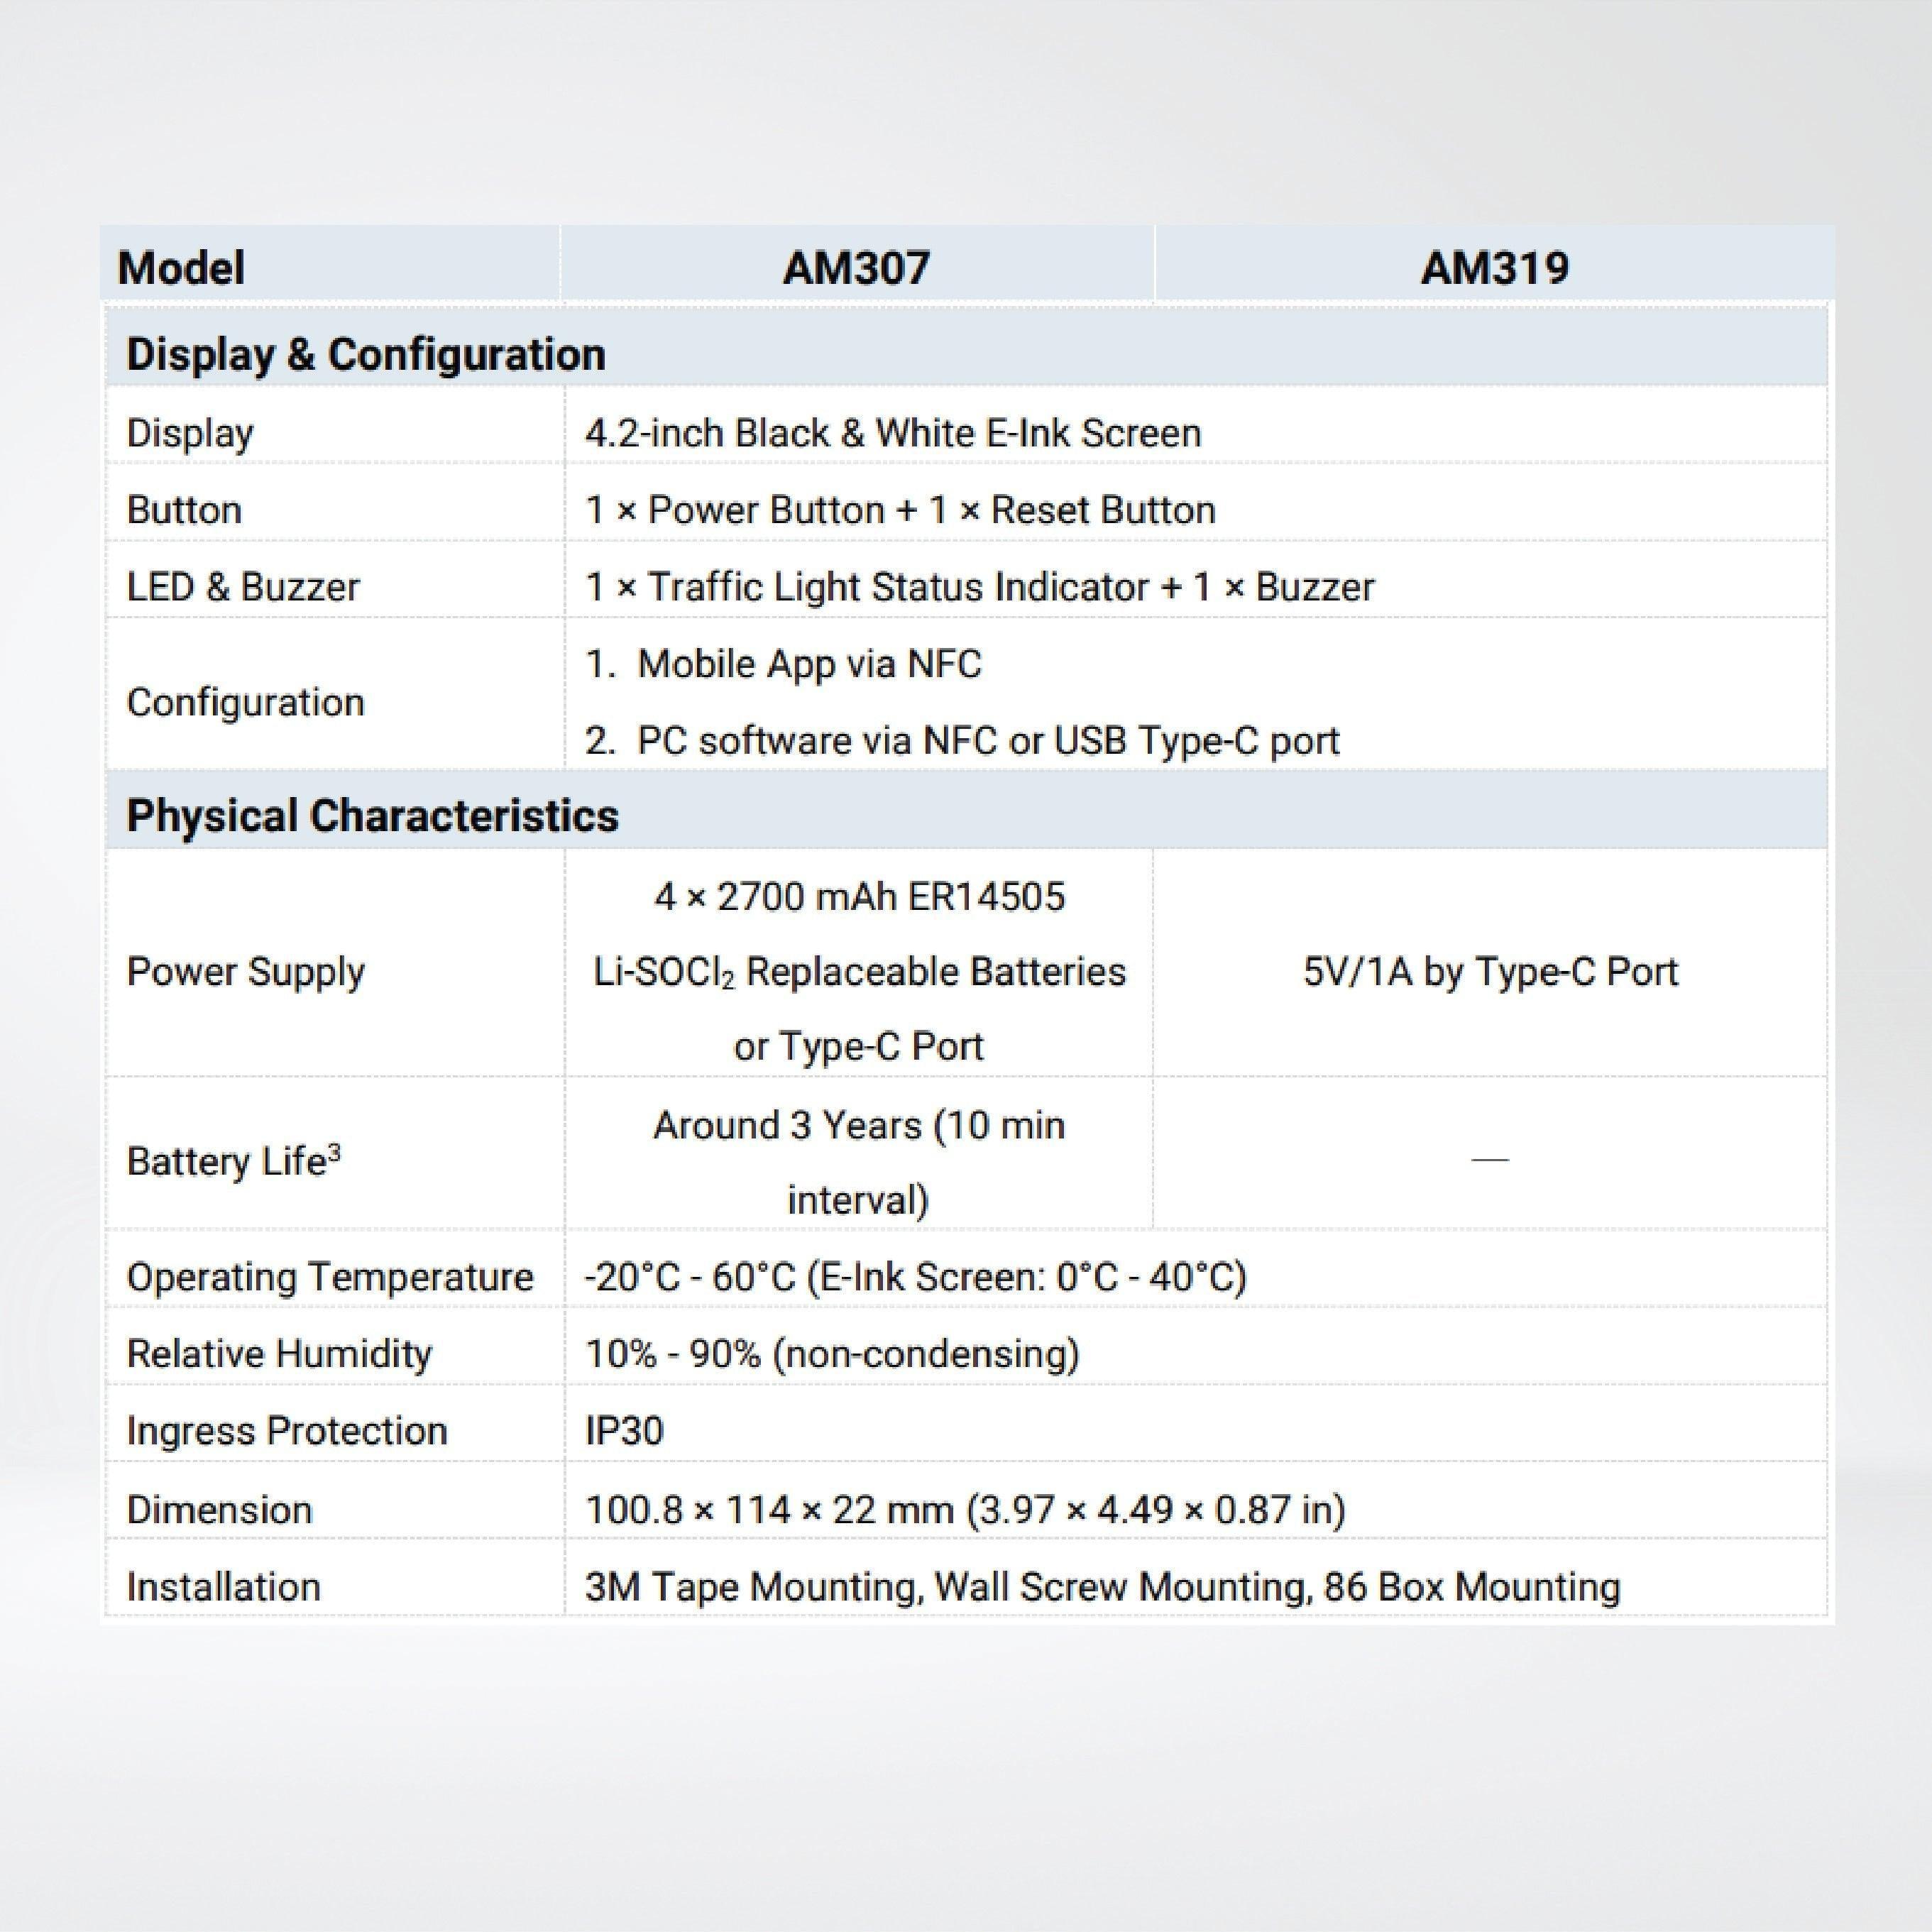 AM307 Ambience Monitoring Sensor - Riverplus